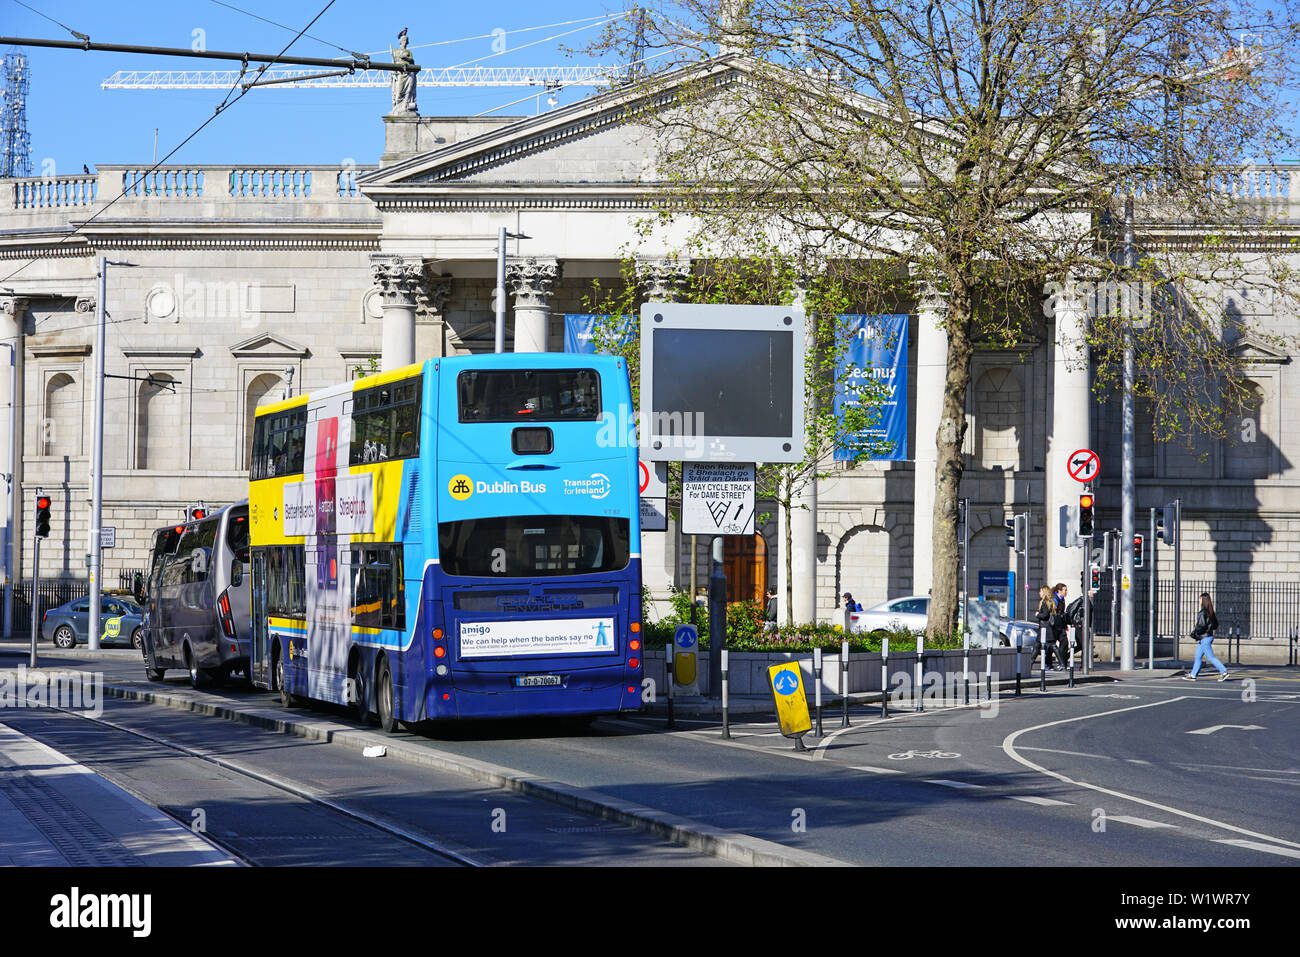 How to Track Dublin Bus